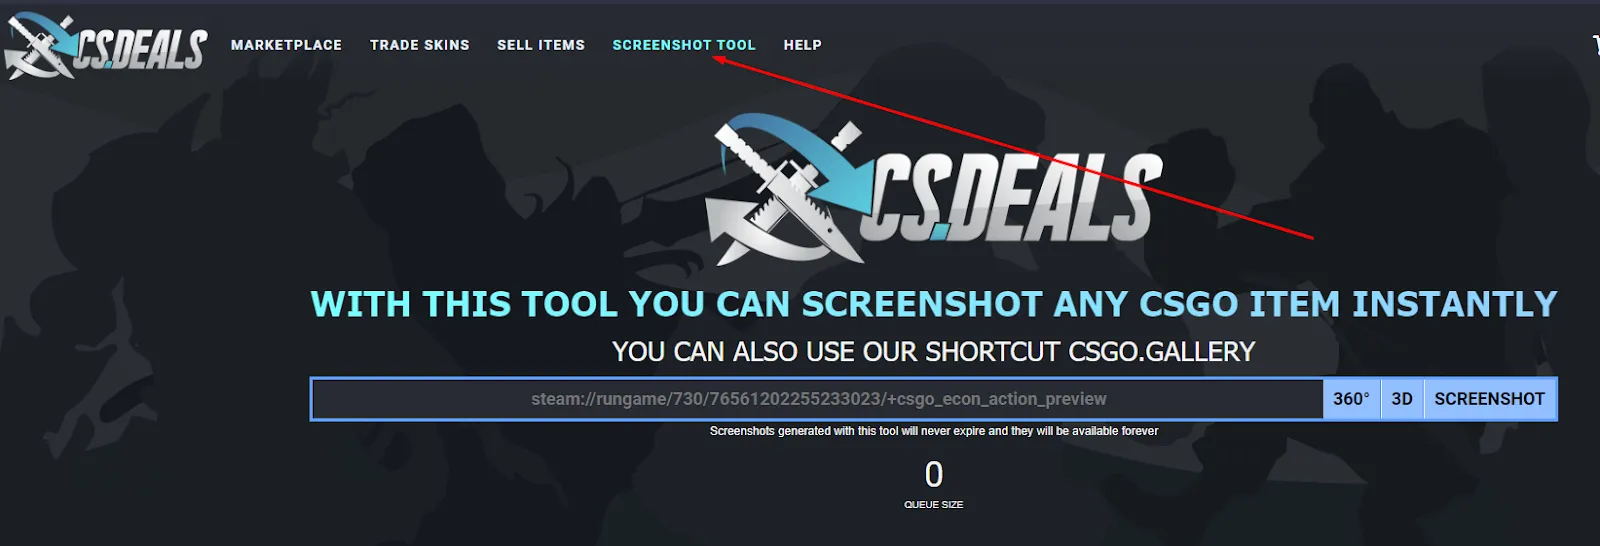 CS.Deals Screenshot